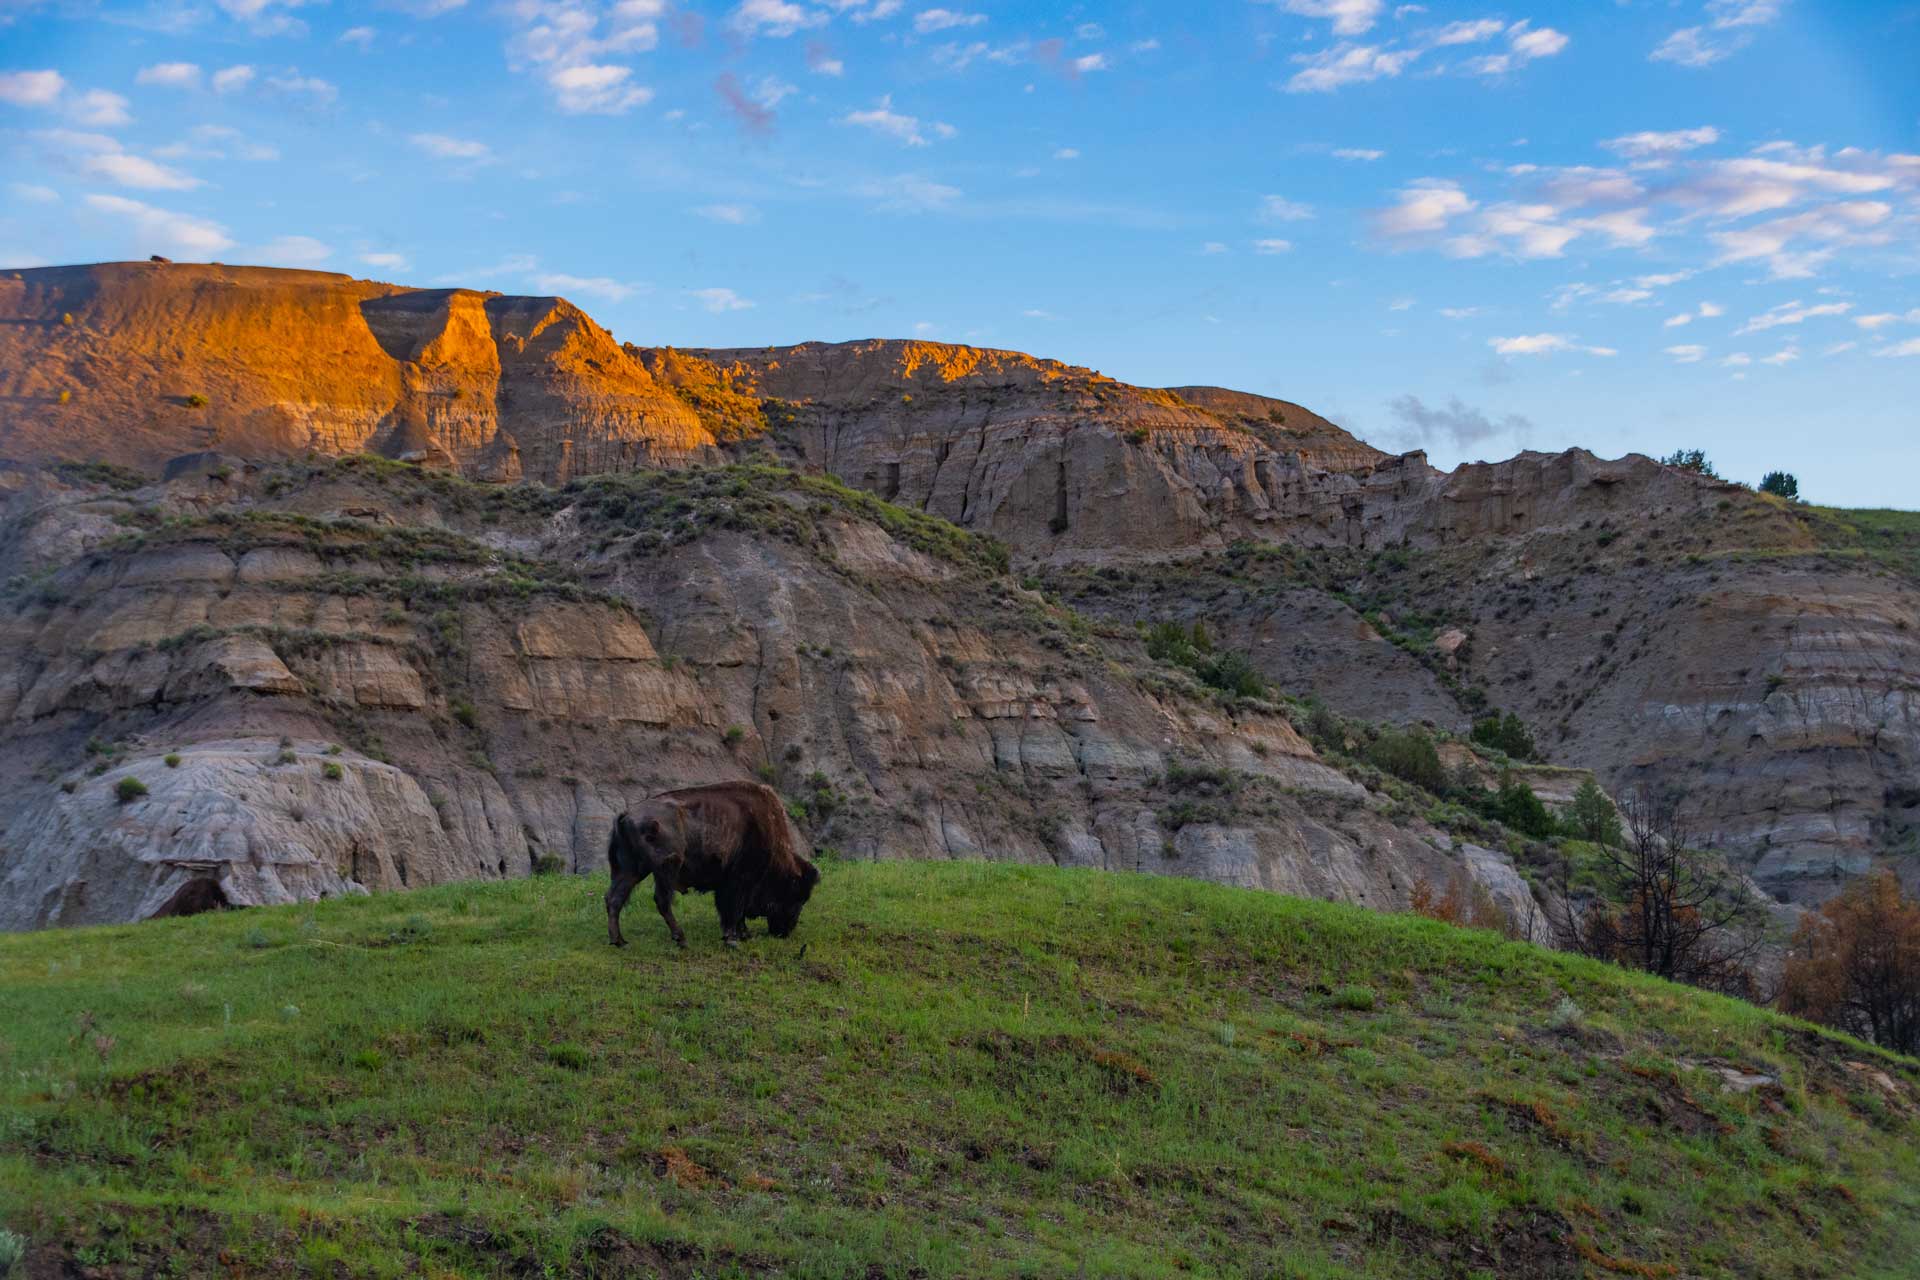 buffalo in the mountains of North Dakota